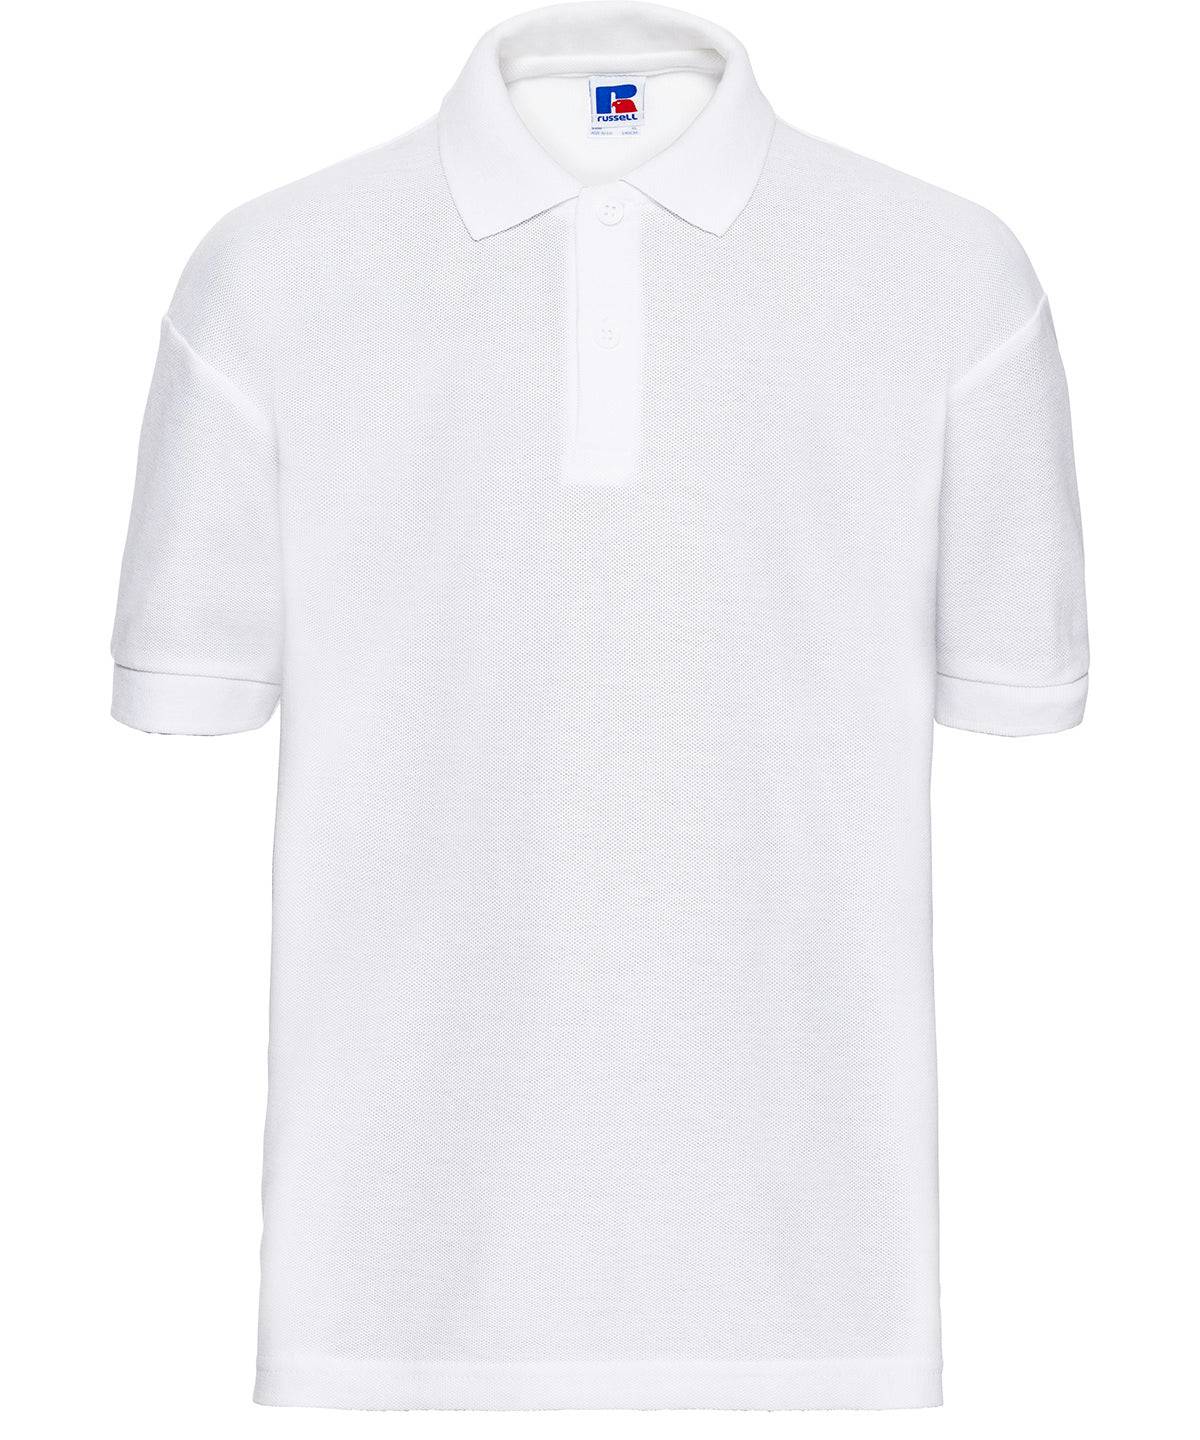 White - Kids polo shirt